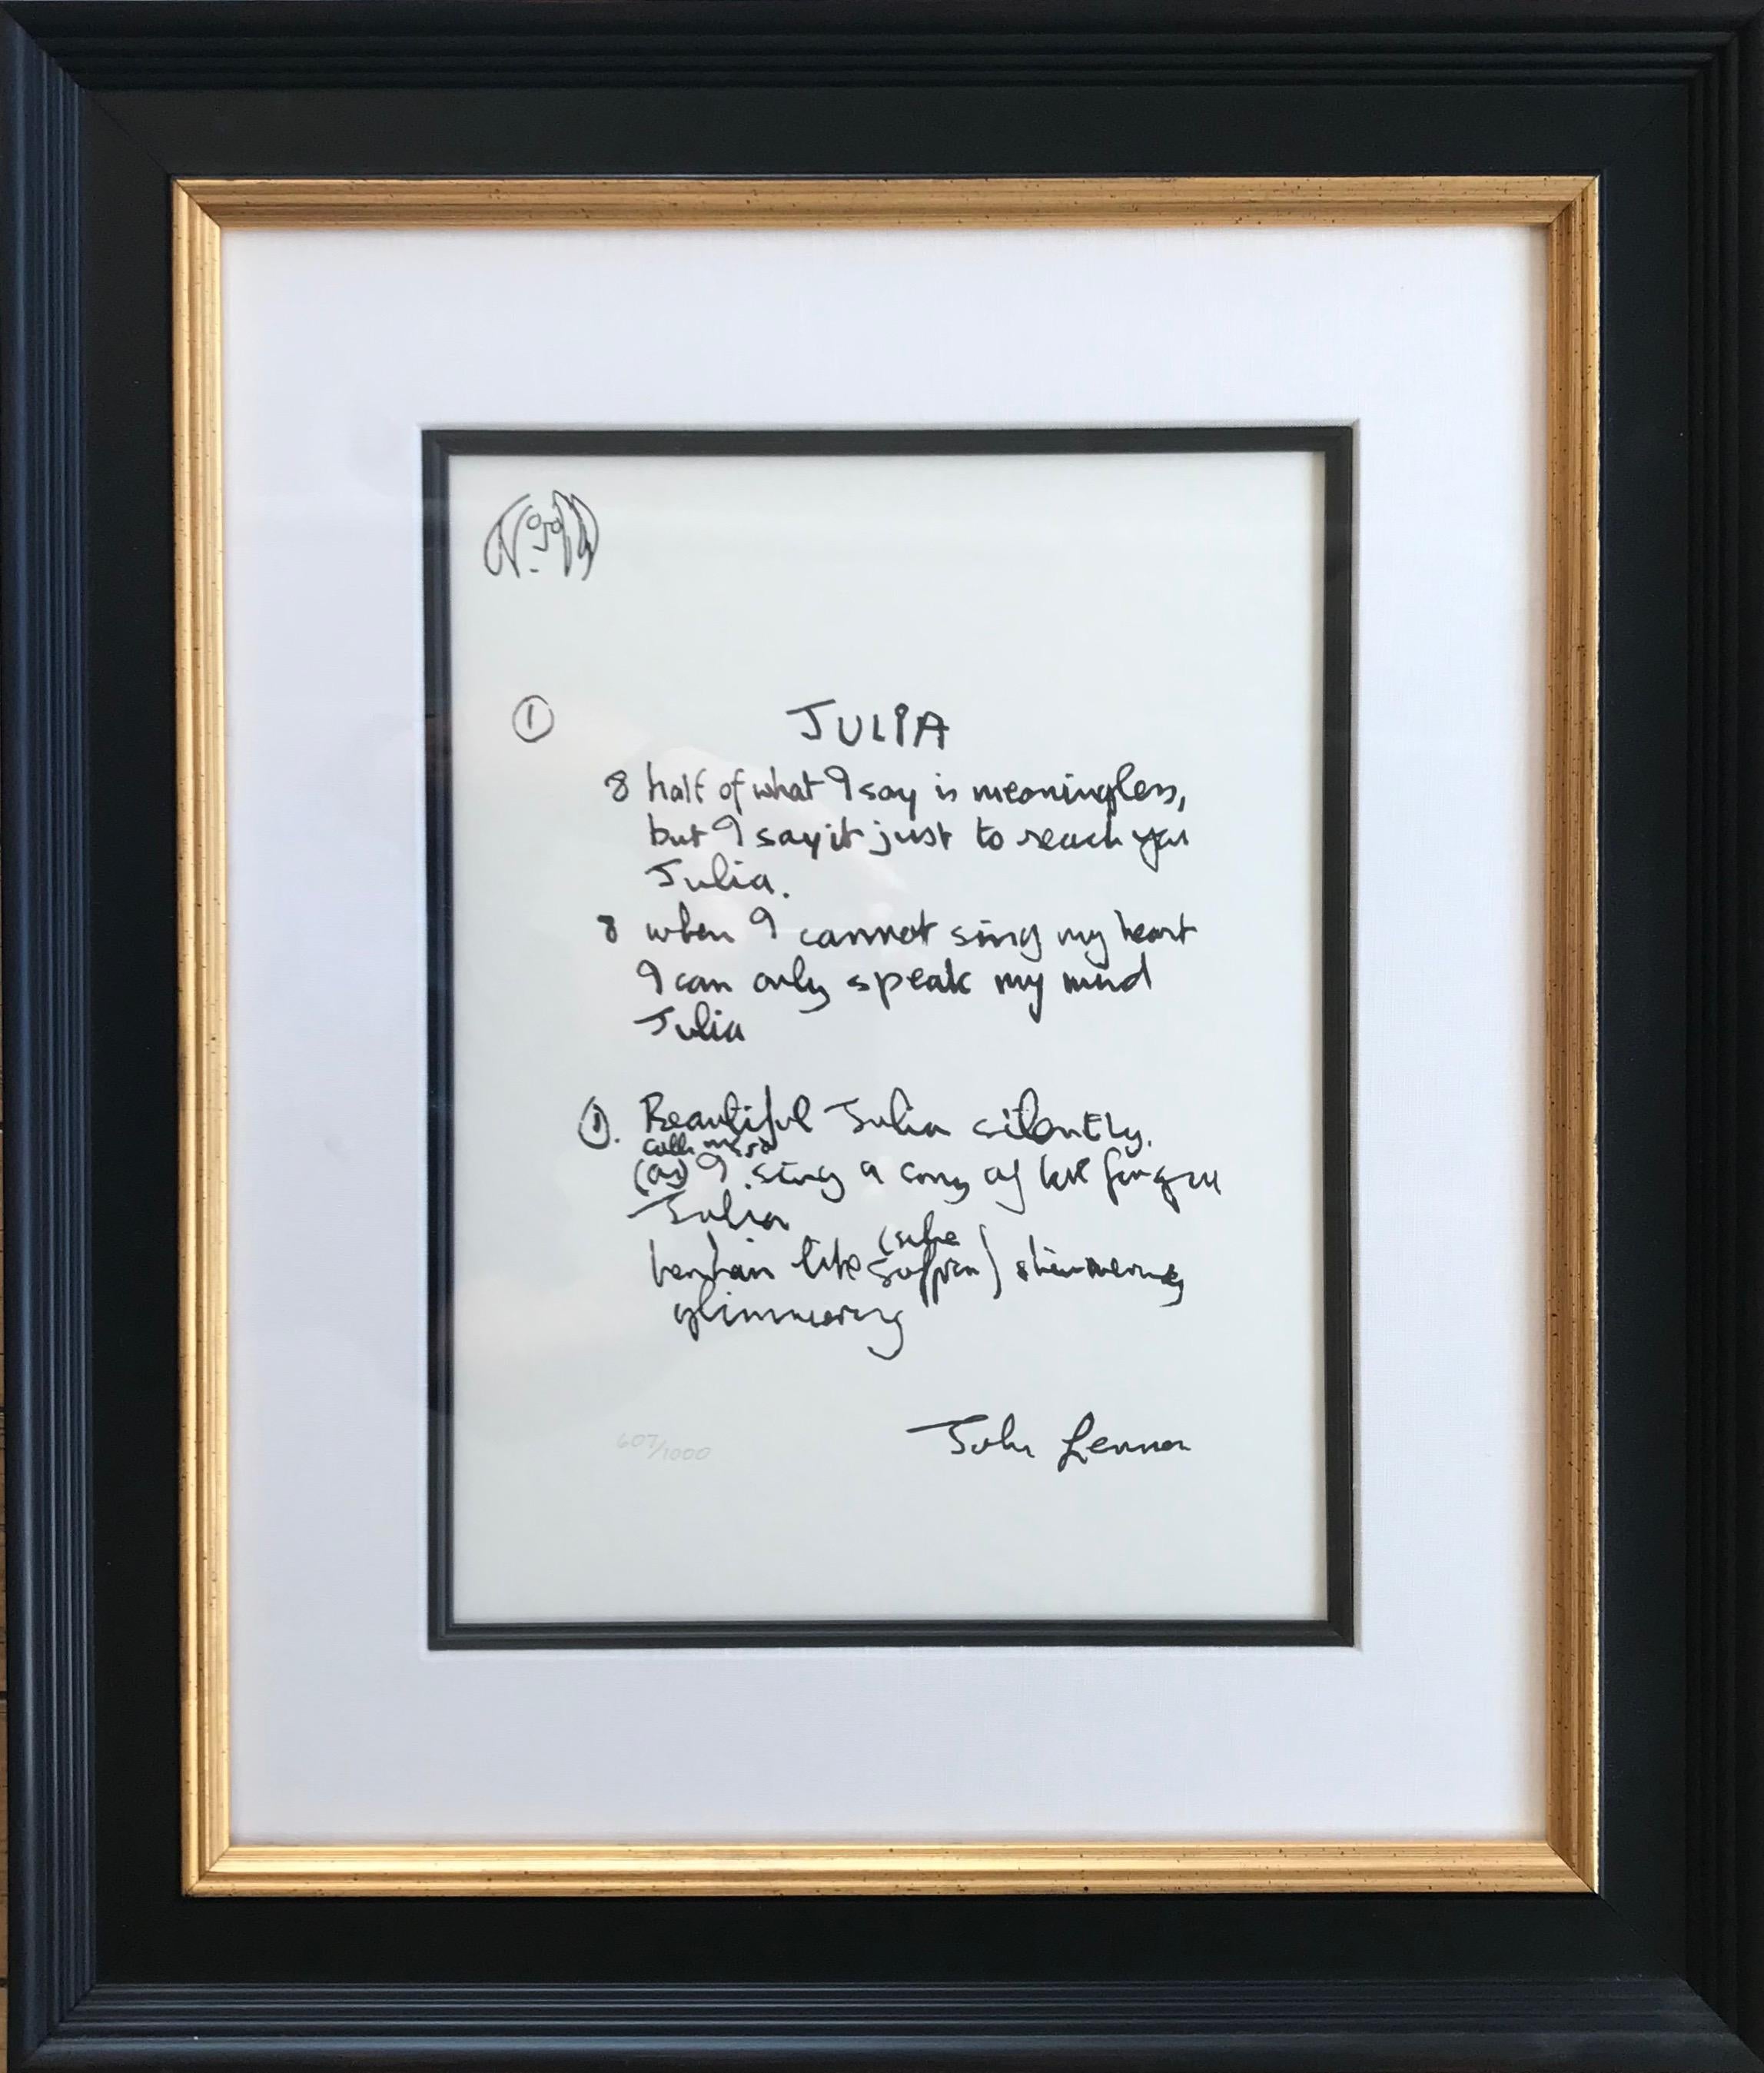 John Lennon Print - "Julia" Framed Limited Edition Hand Written Lyrics